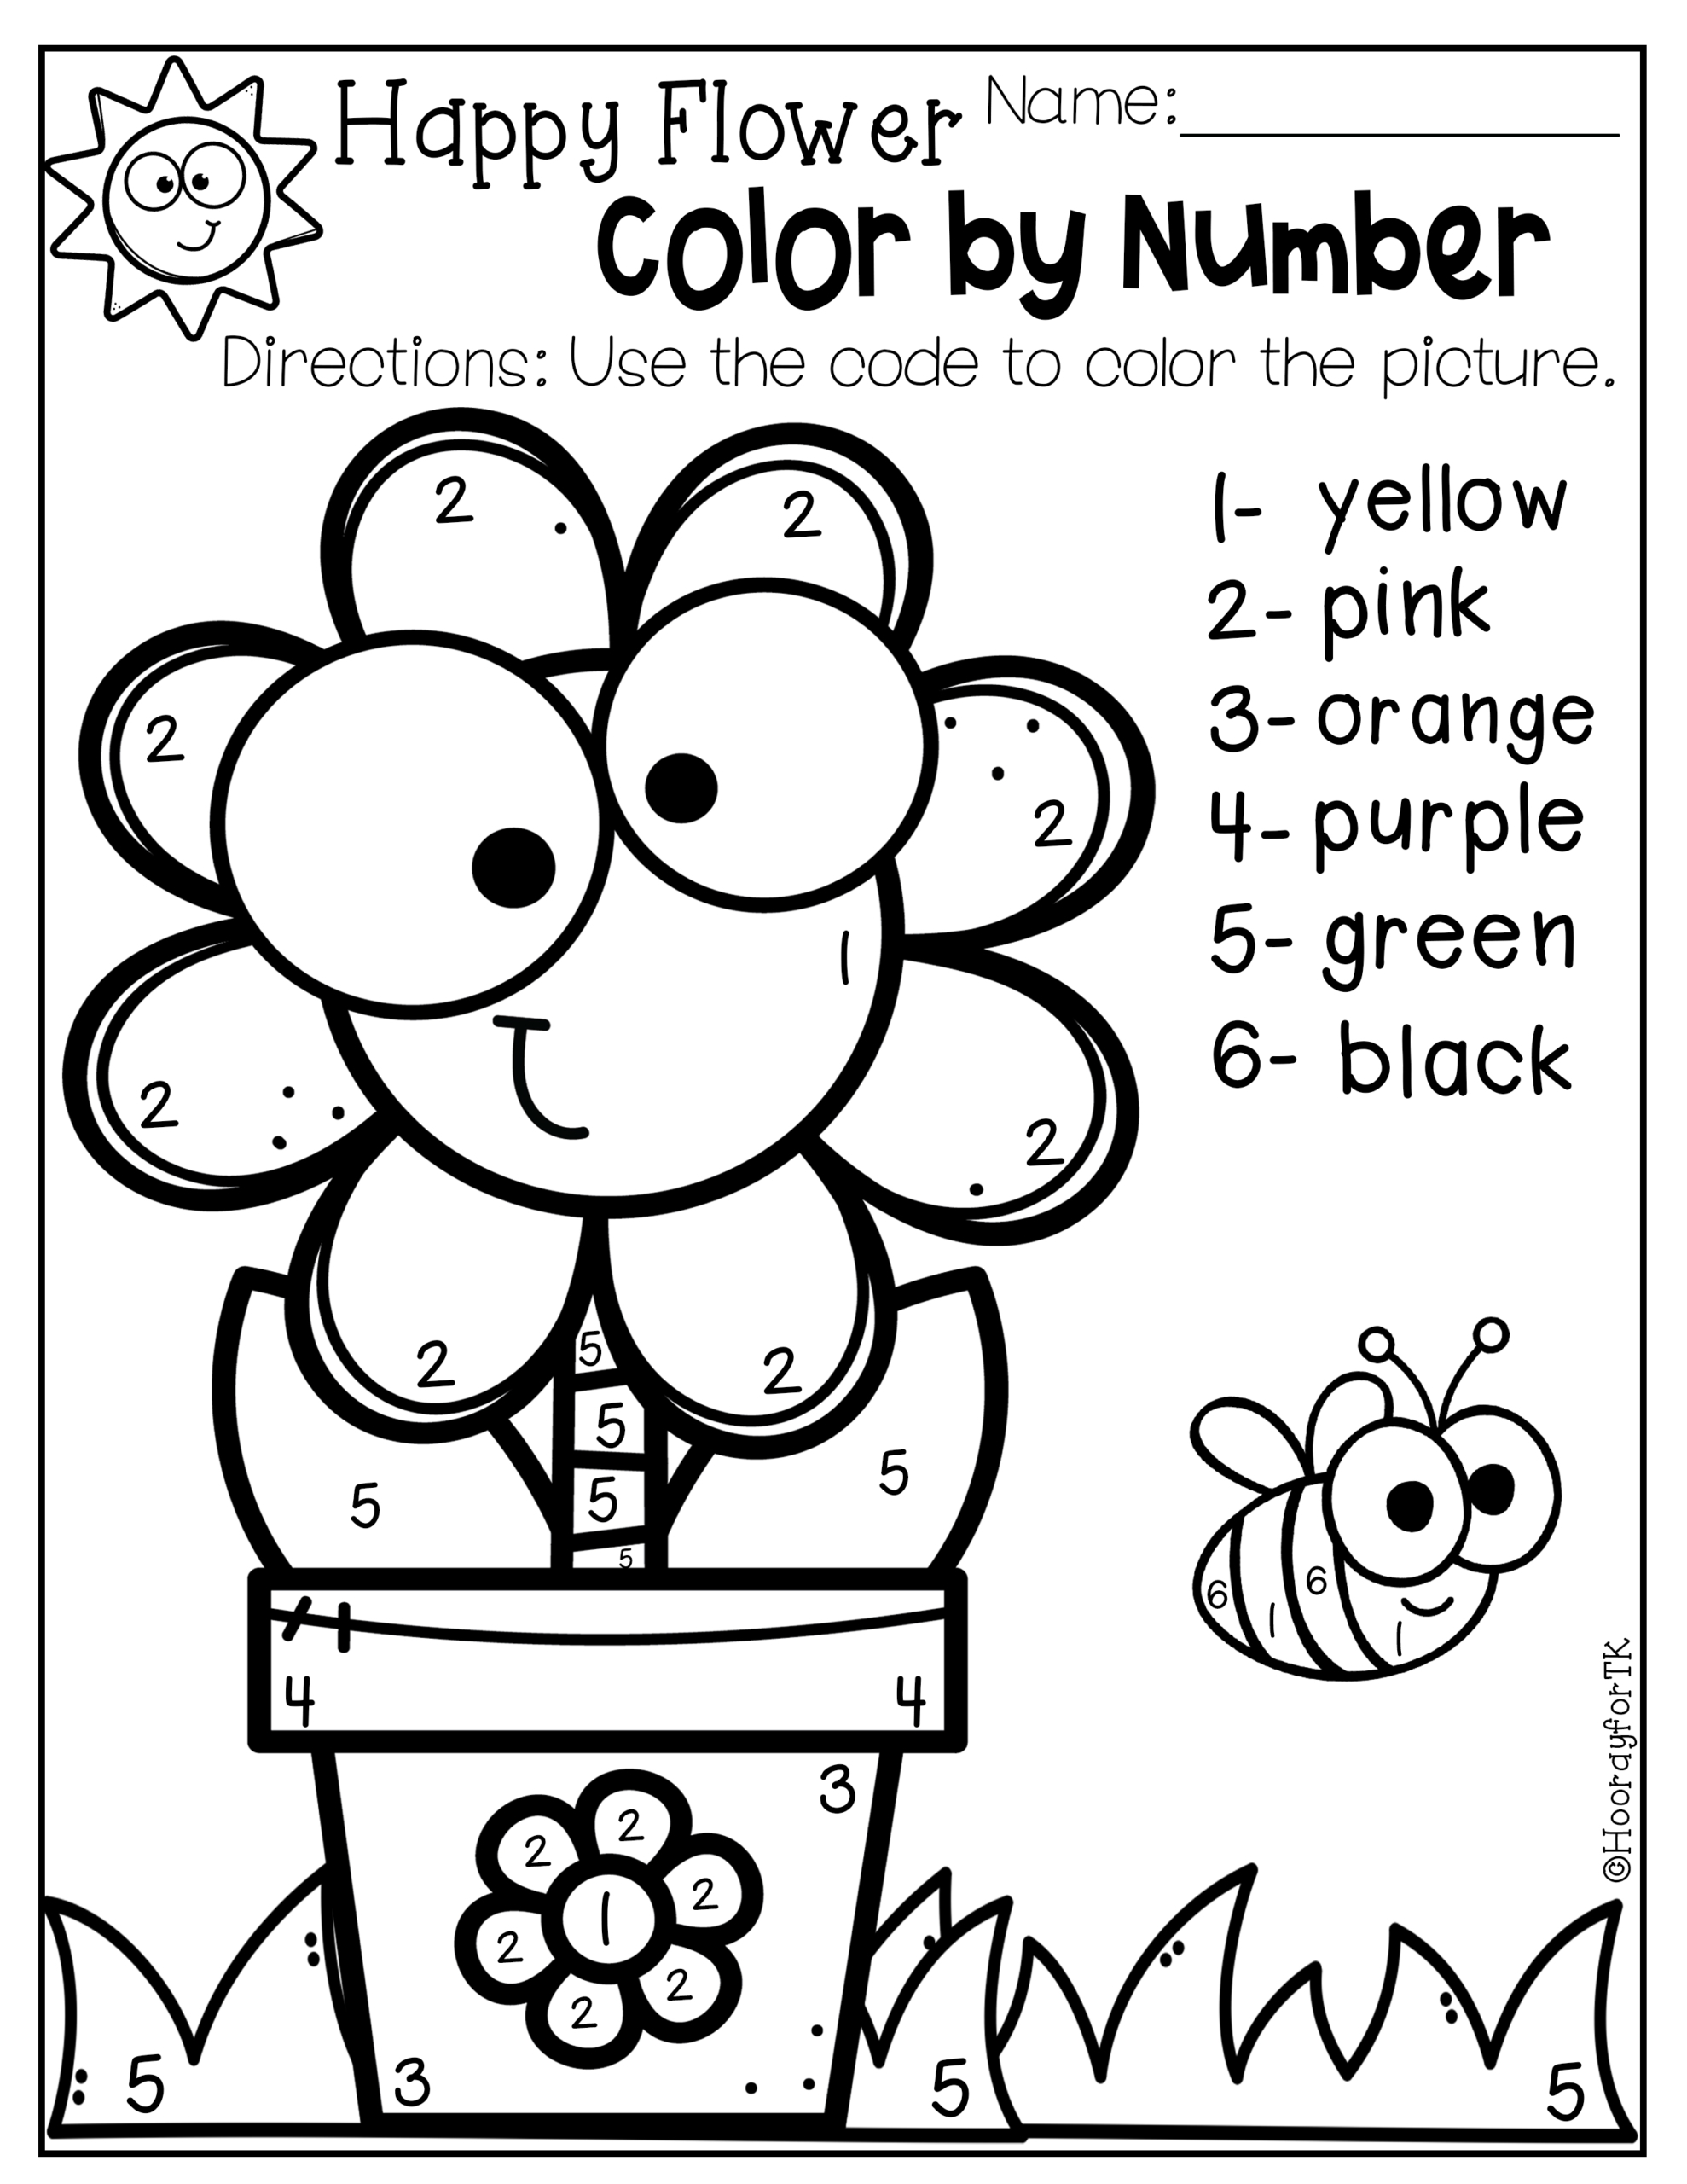 Happy Flower Color by Number Worksheet